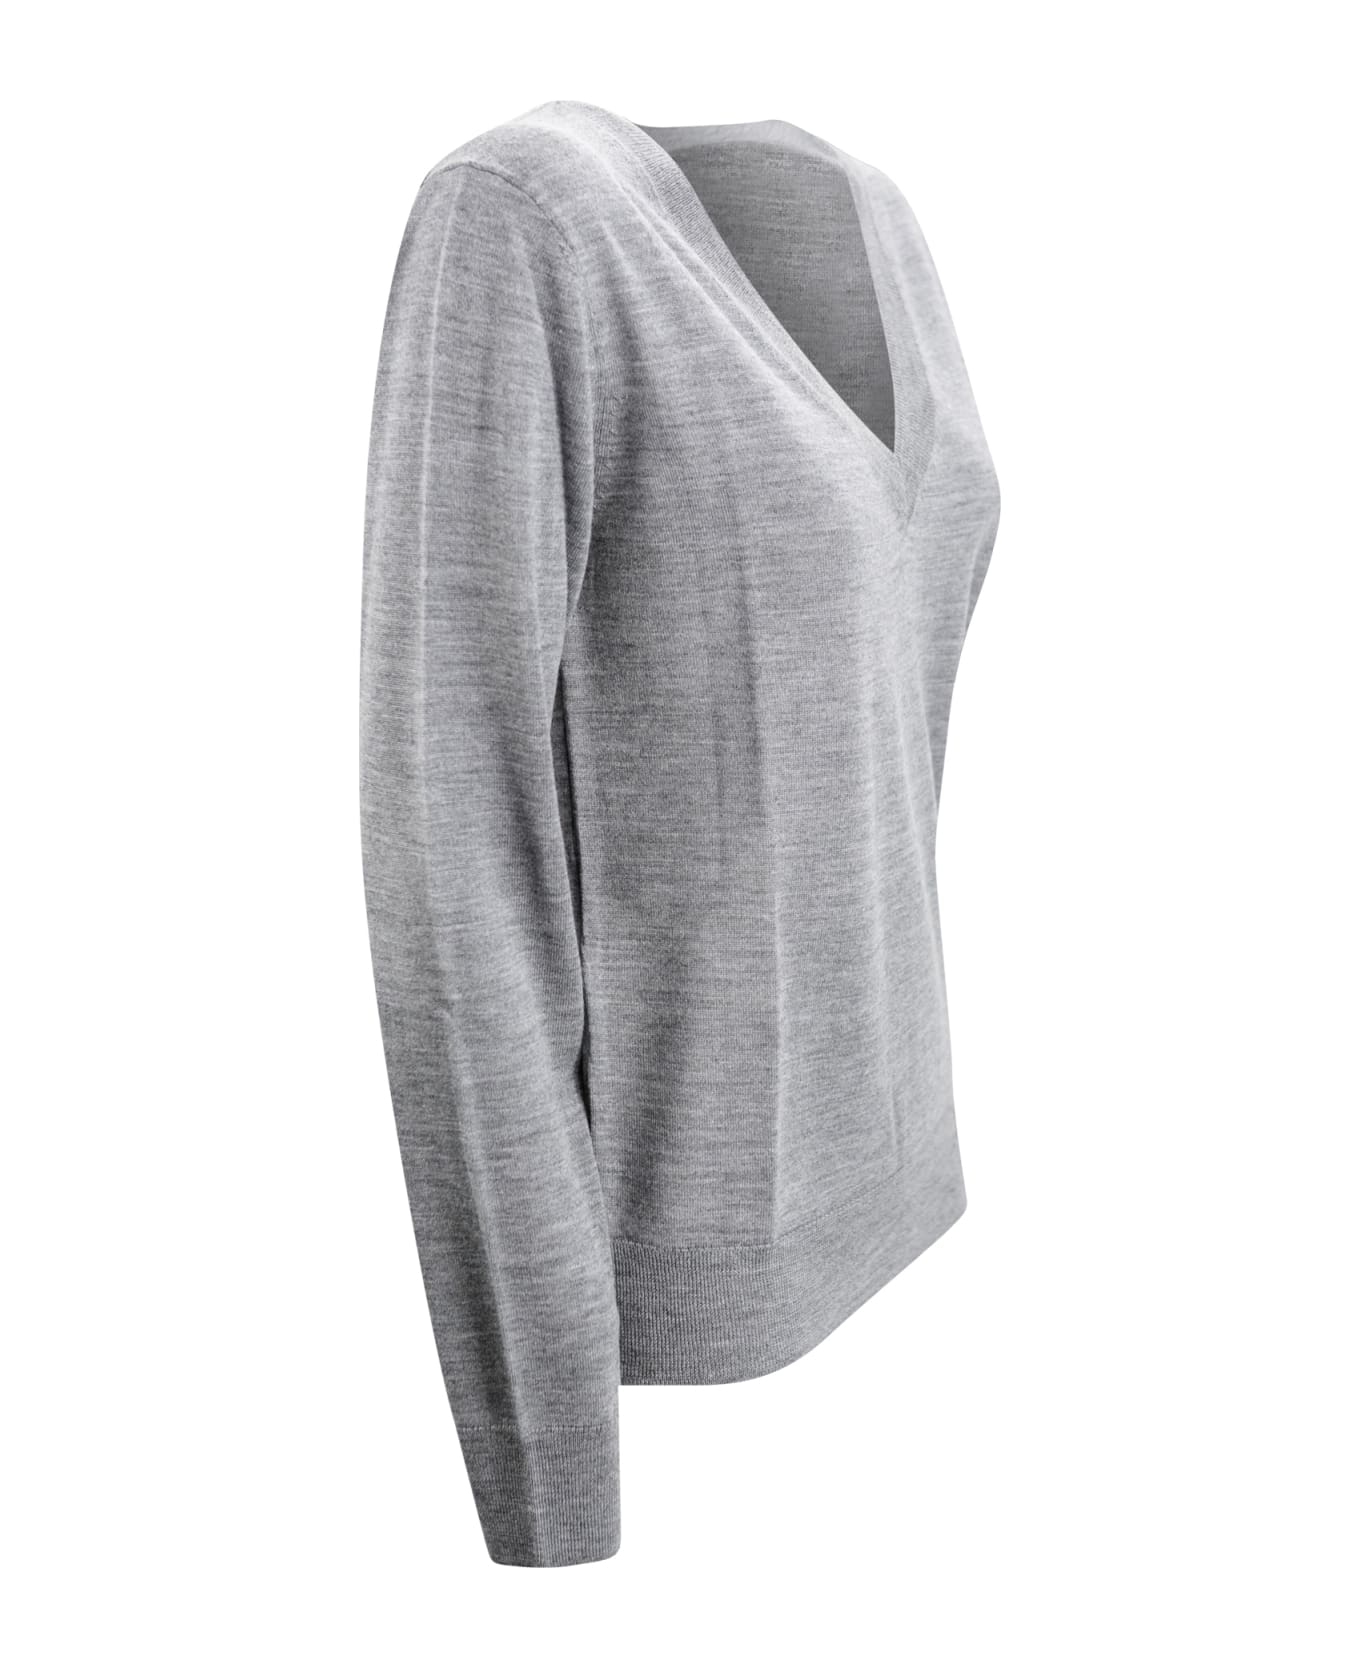 Parosh V-neck Fine-knit Jumper - Grey